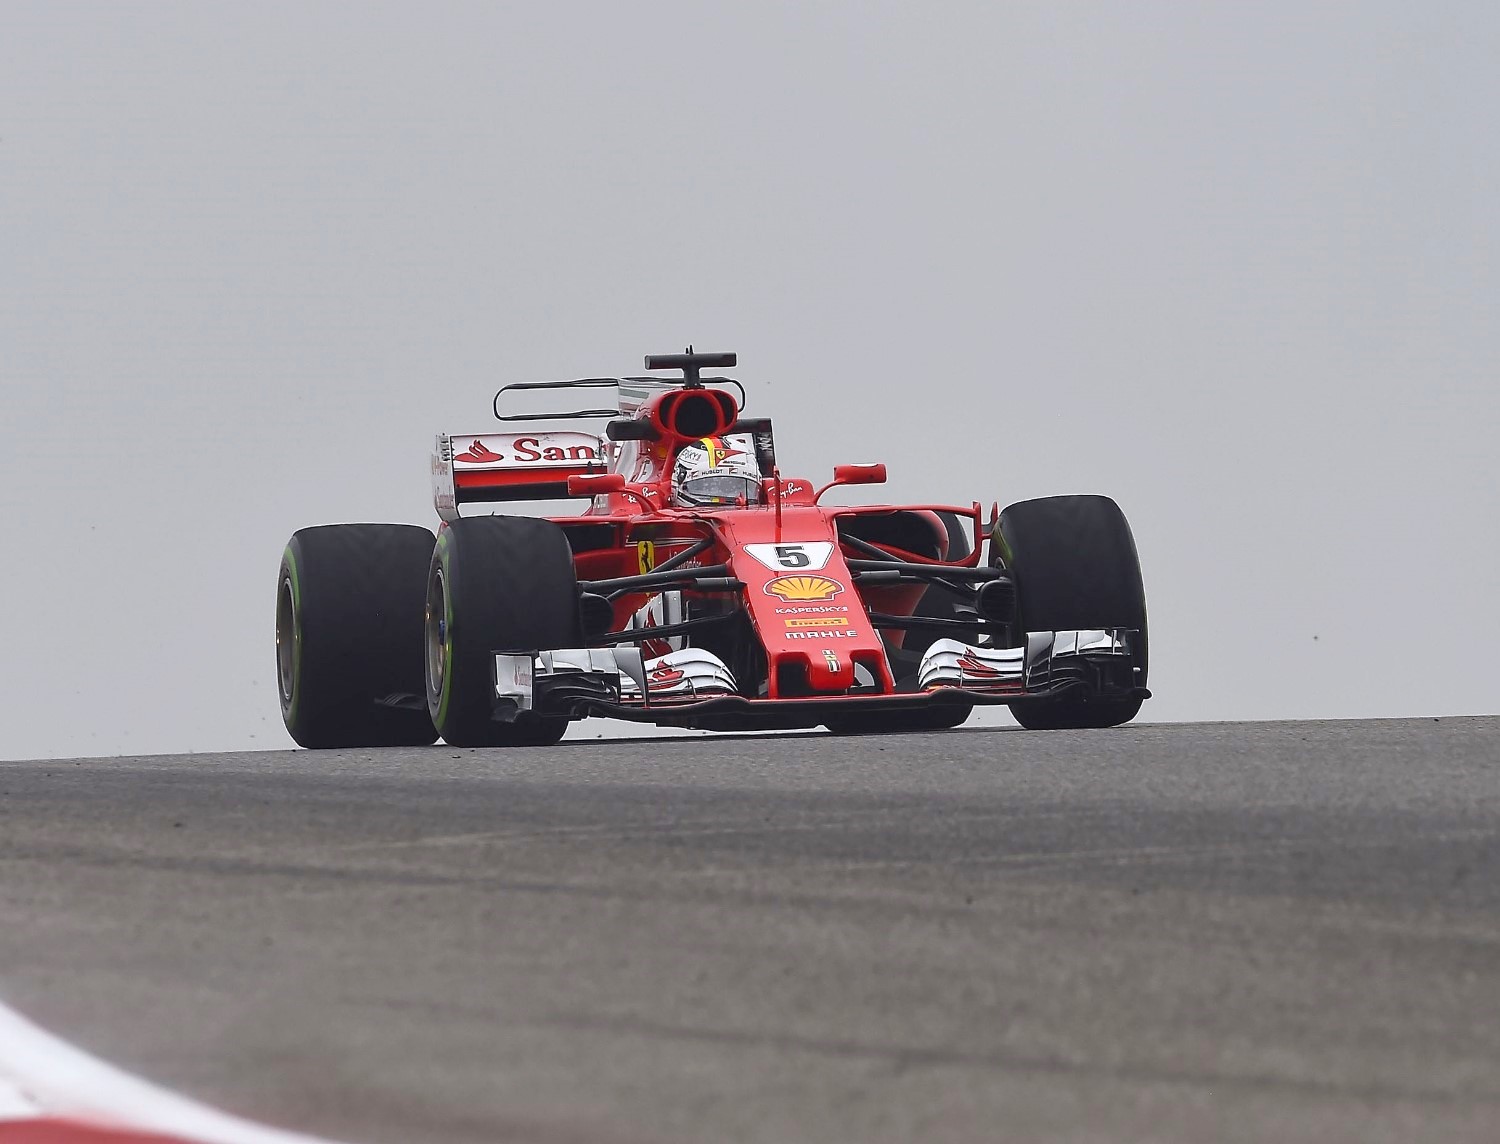 Vettel third despite very few laps